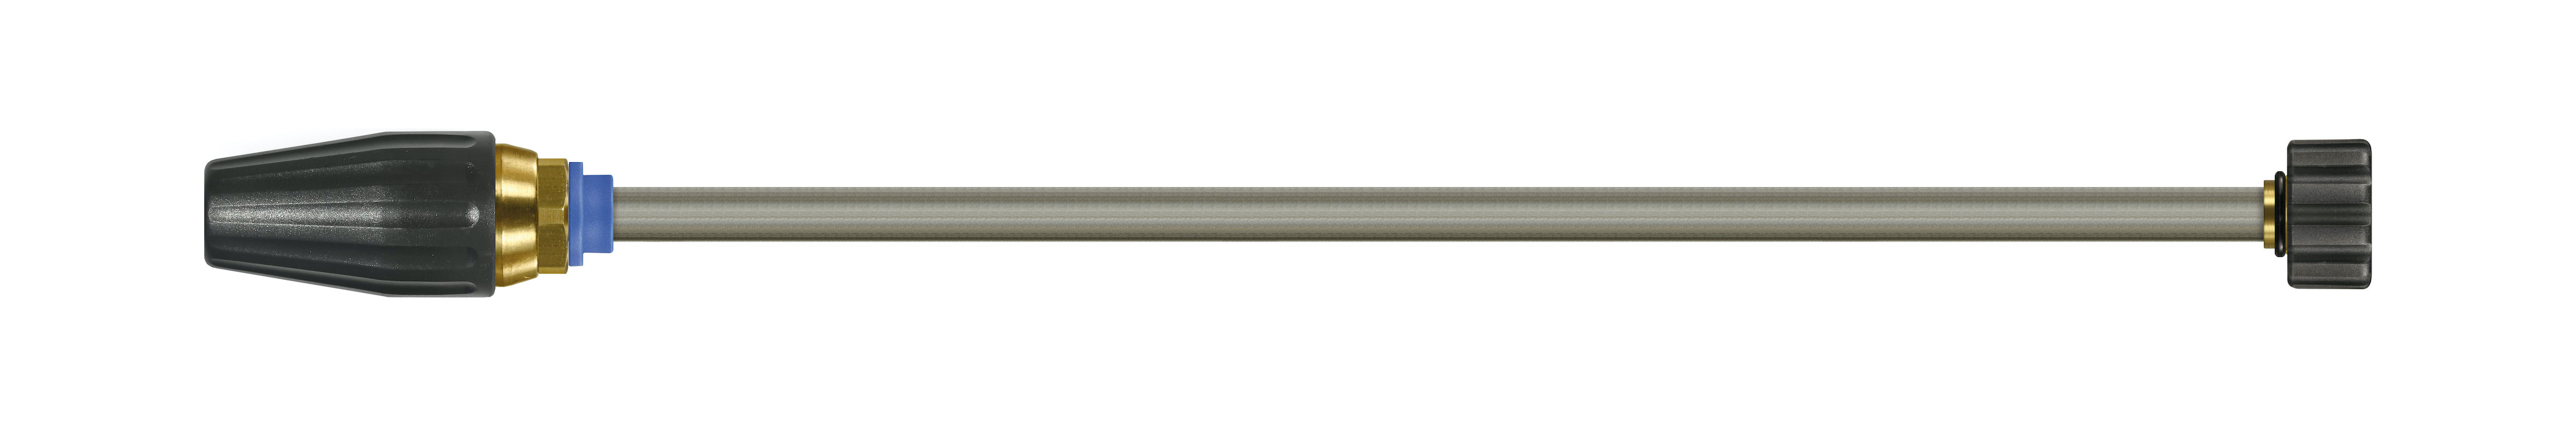 Rotabuse céramique avec lance 430mm, 100-250 bar, Calibre 070.